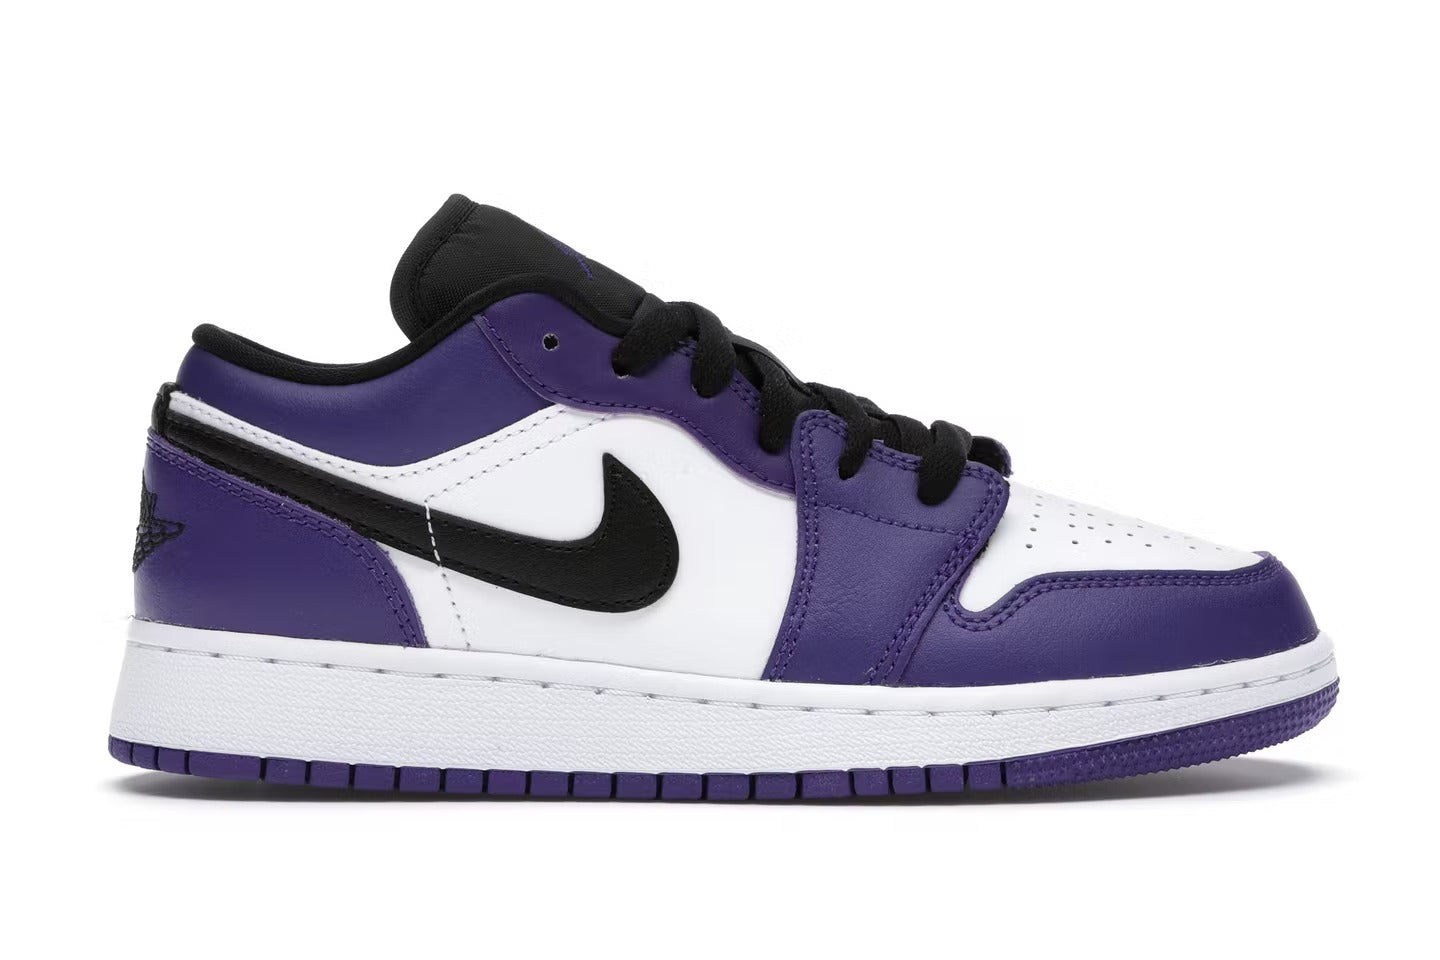 Jordan 13 Retro Court Purple for Sale, Authenticity Guaranteed